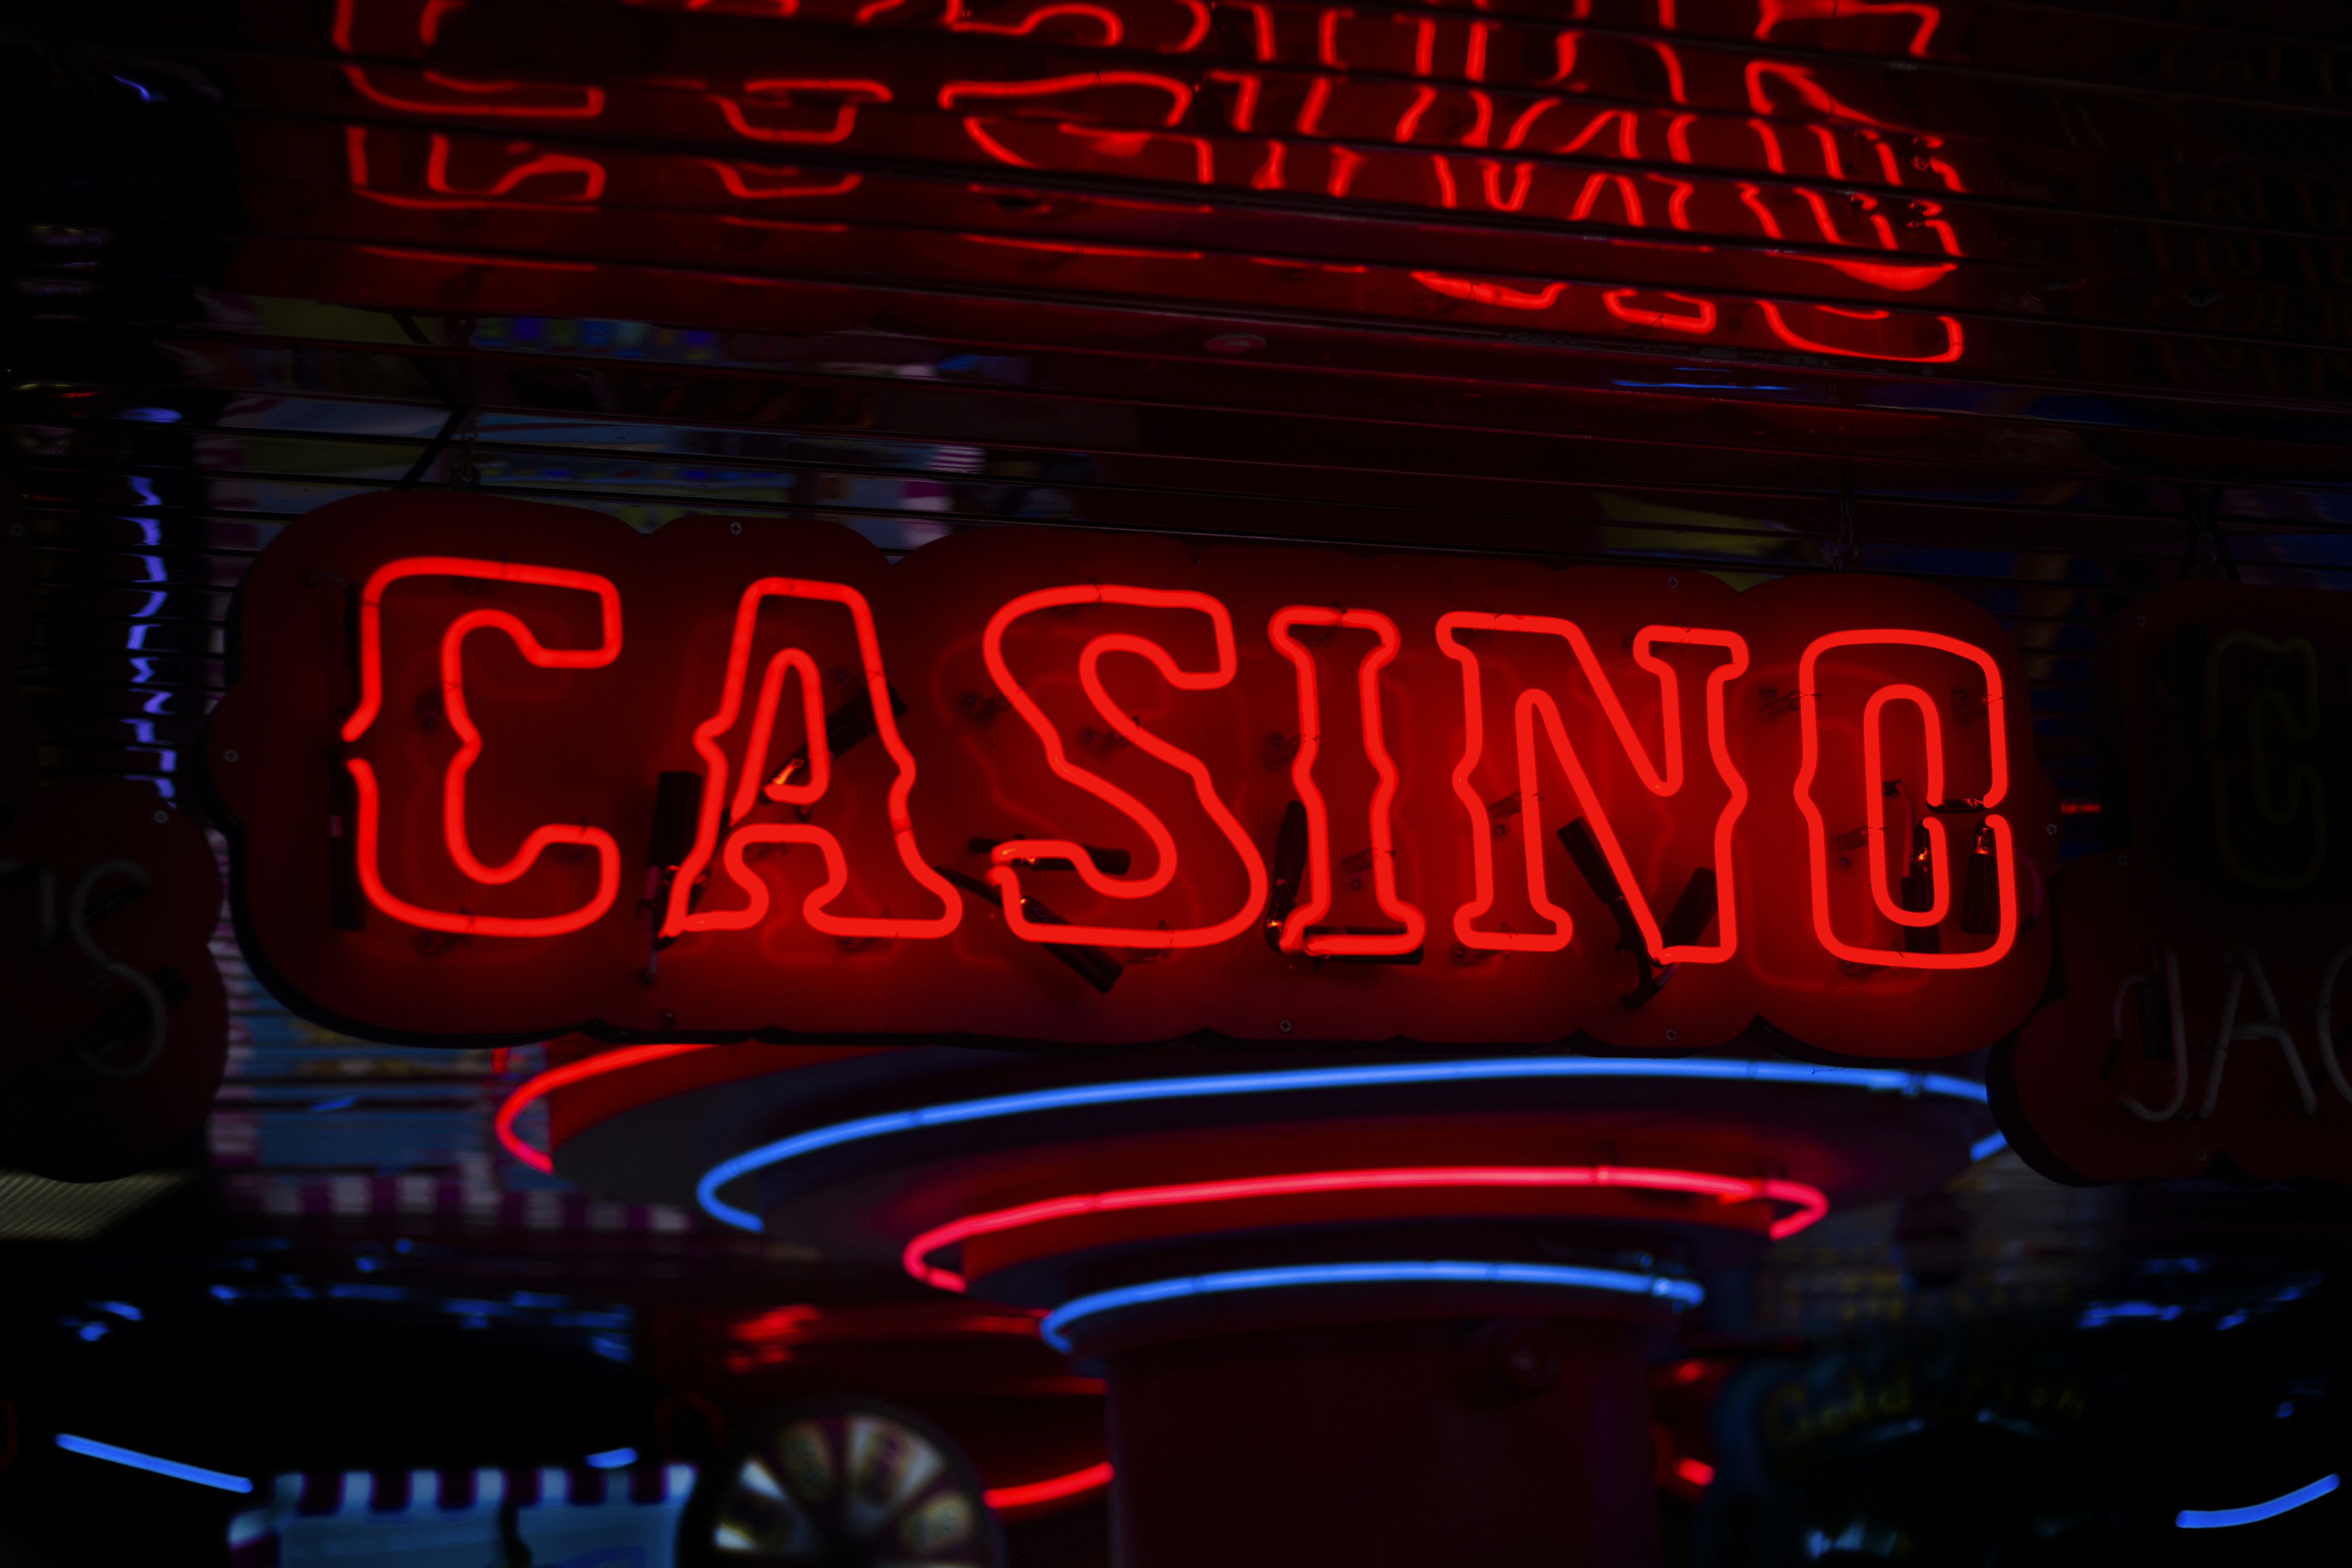 gta online casino